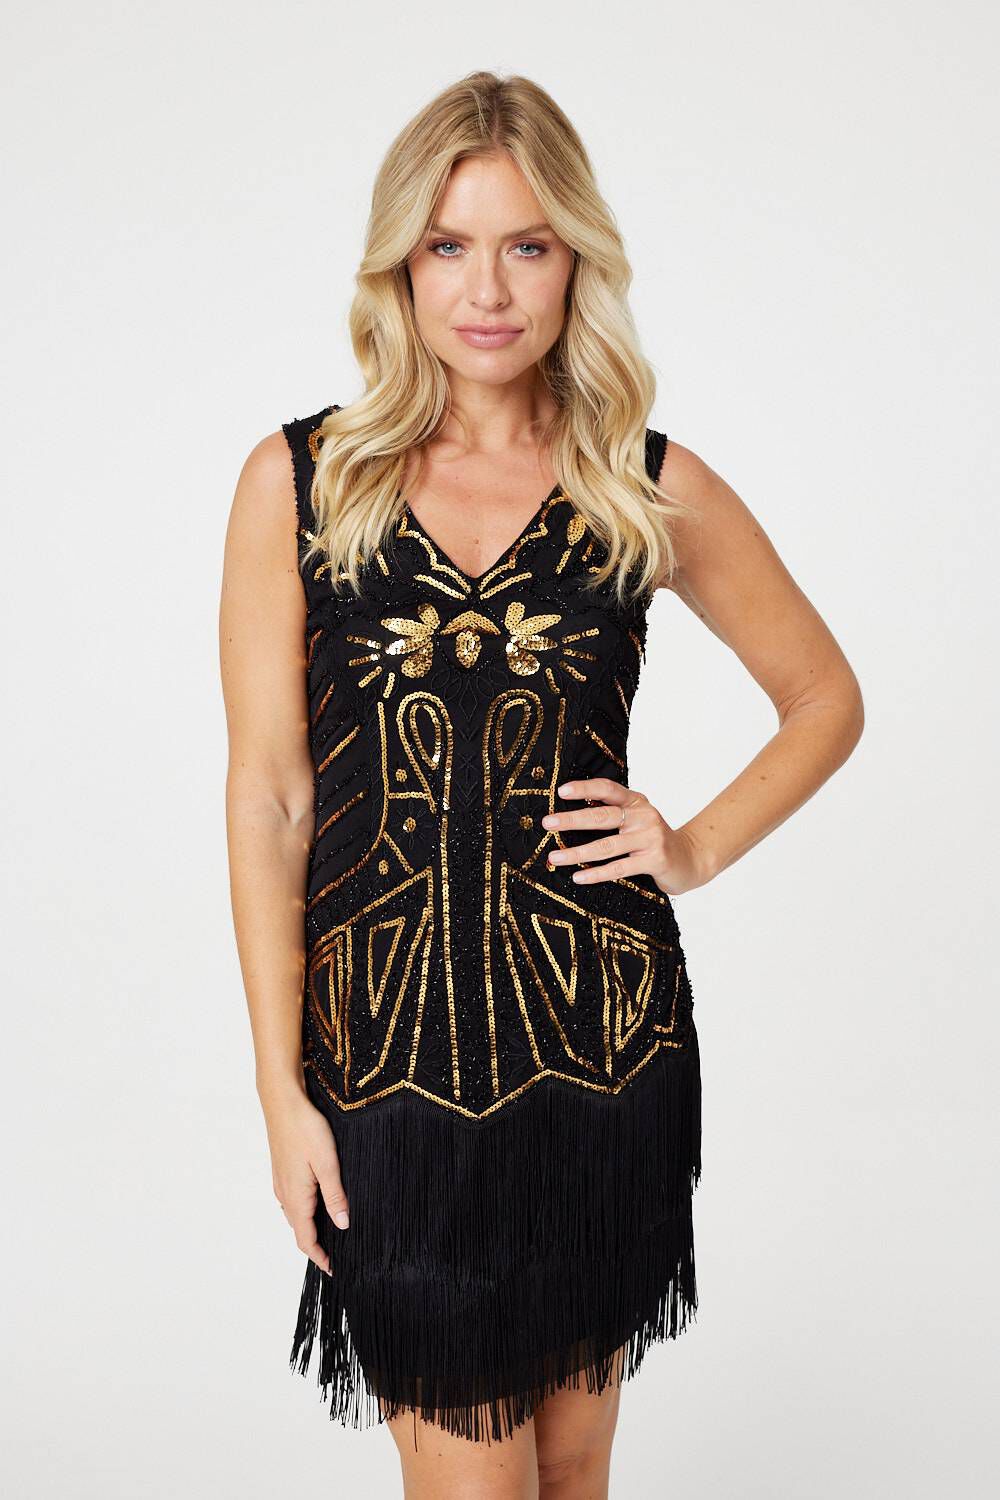 Izabel London Women’s Black and Gold Sequin Sleeveless Short Dress, Size: 14